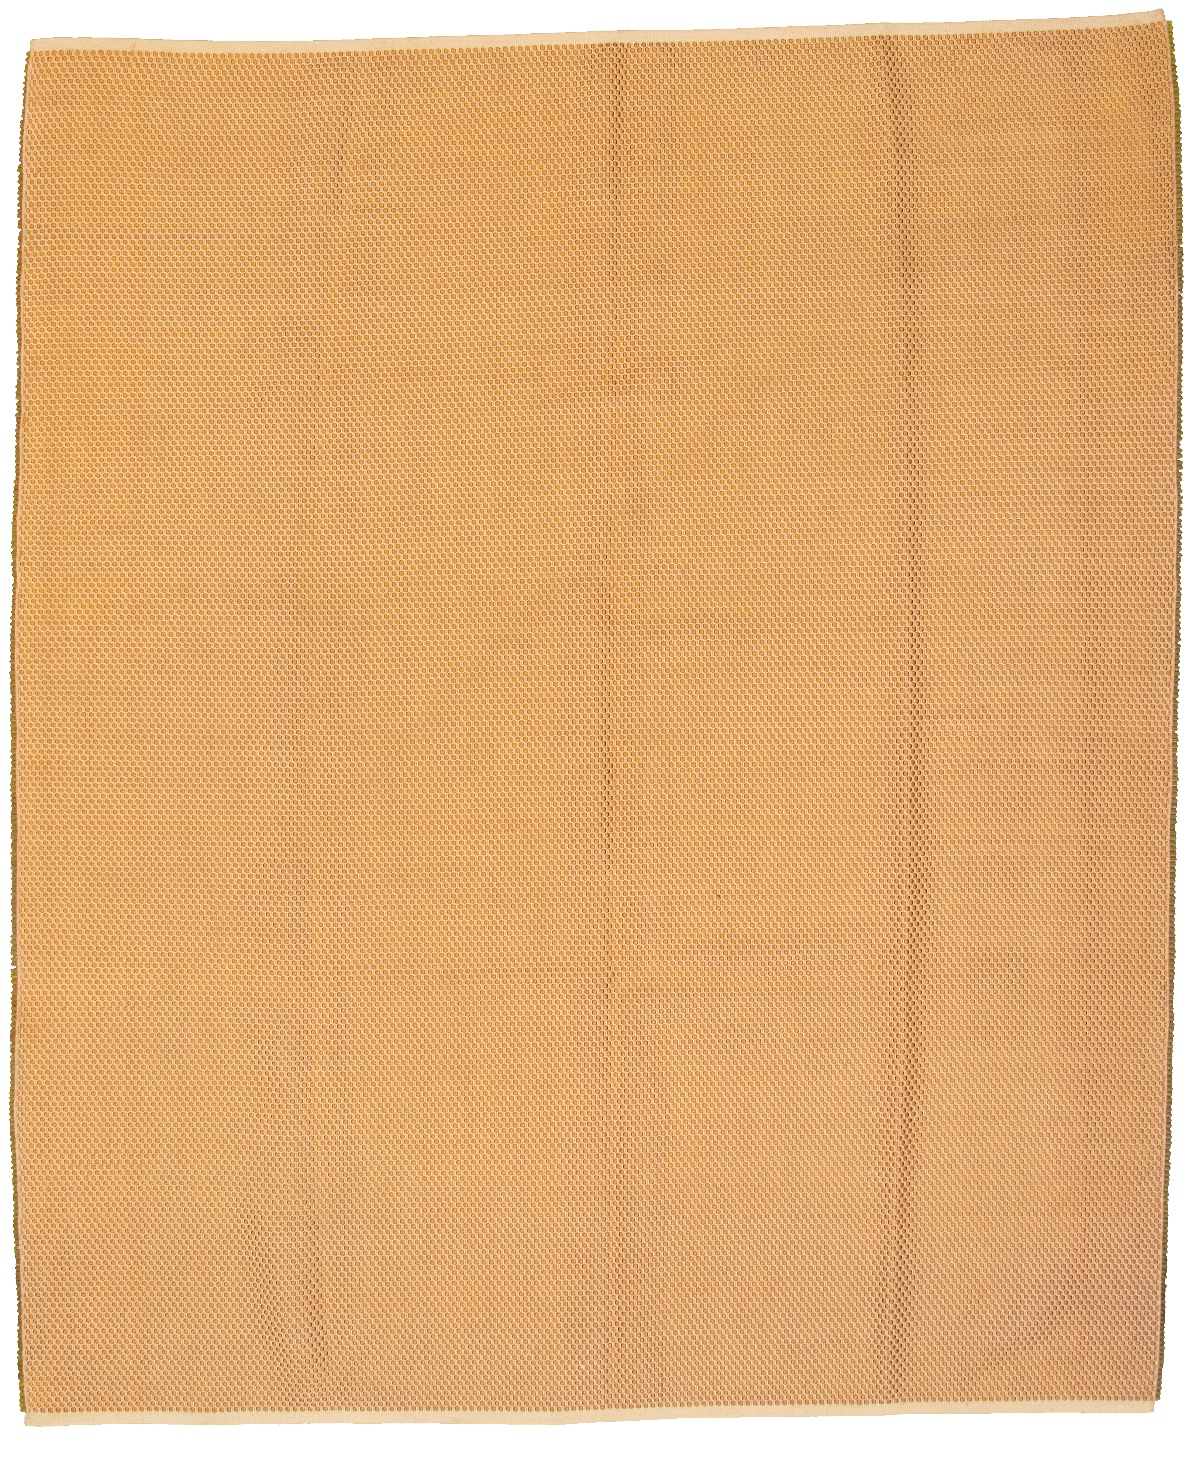 Handmade Honeycomb III Light Orange Cotton/Polyester Rug 8'1" x 9'9" Size: 8'1" x 9'9"  